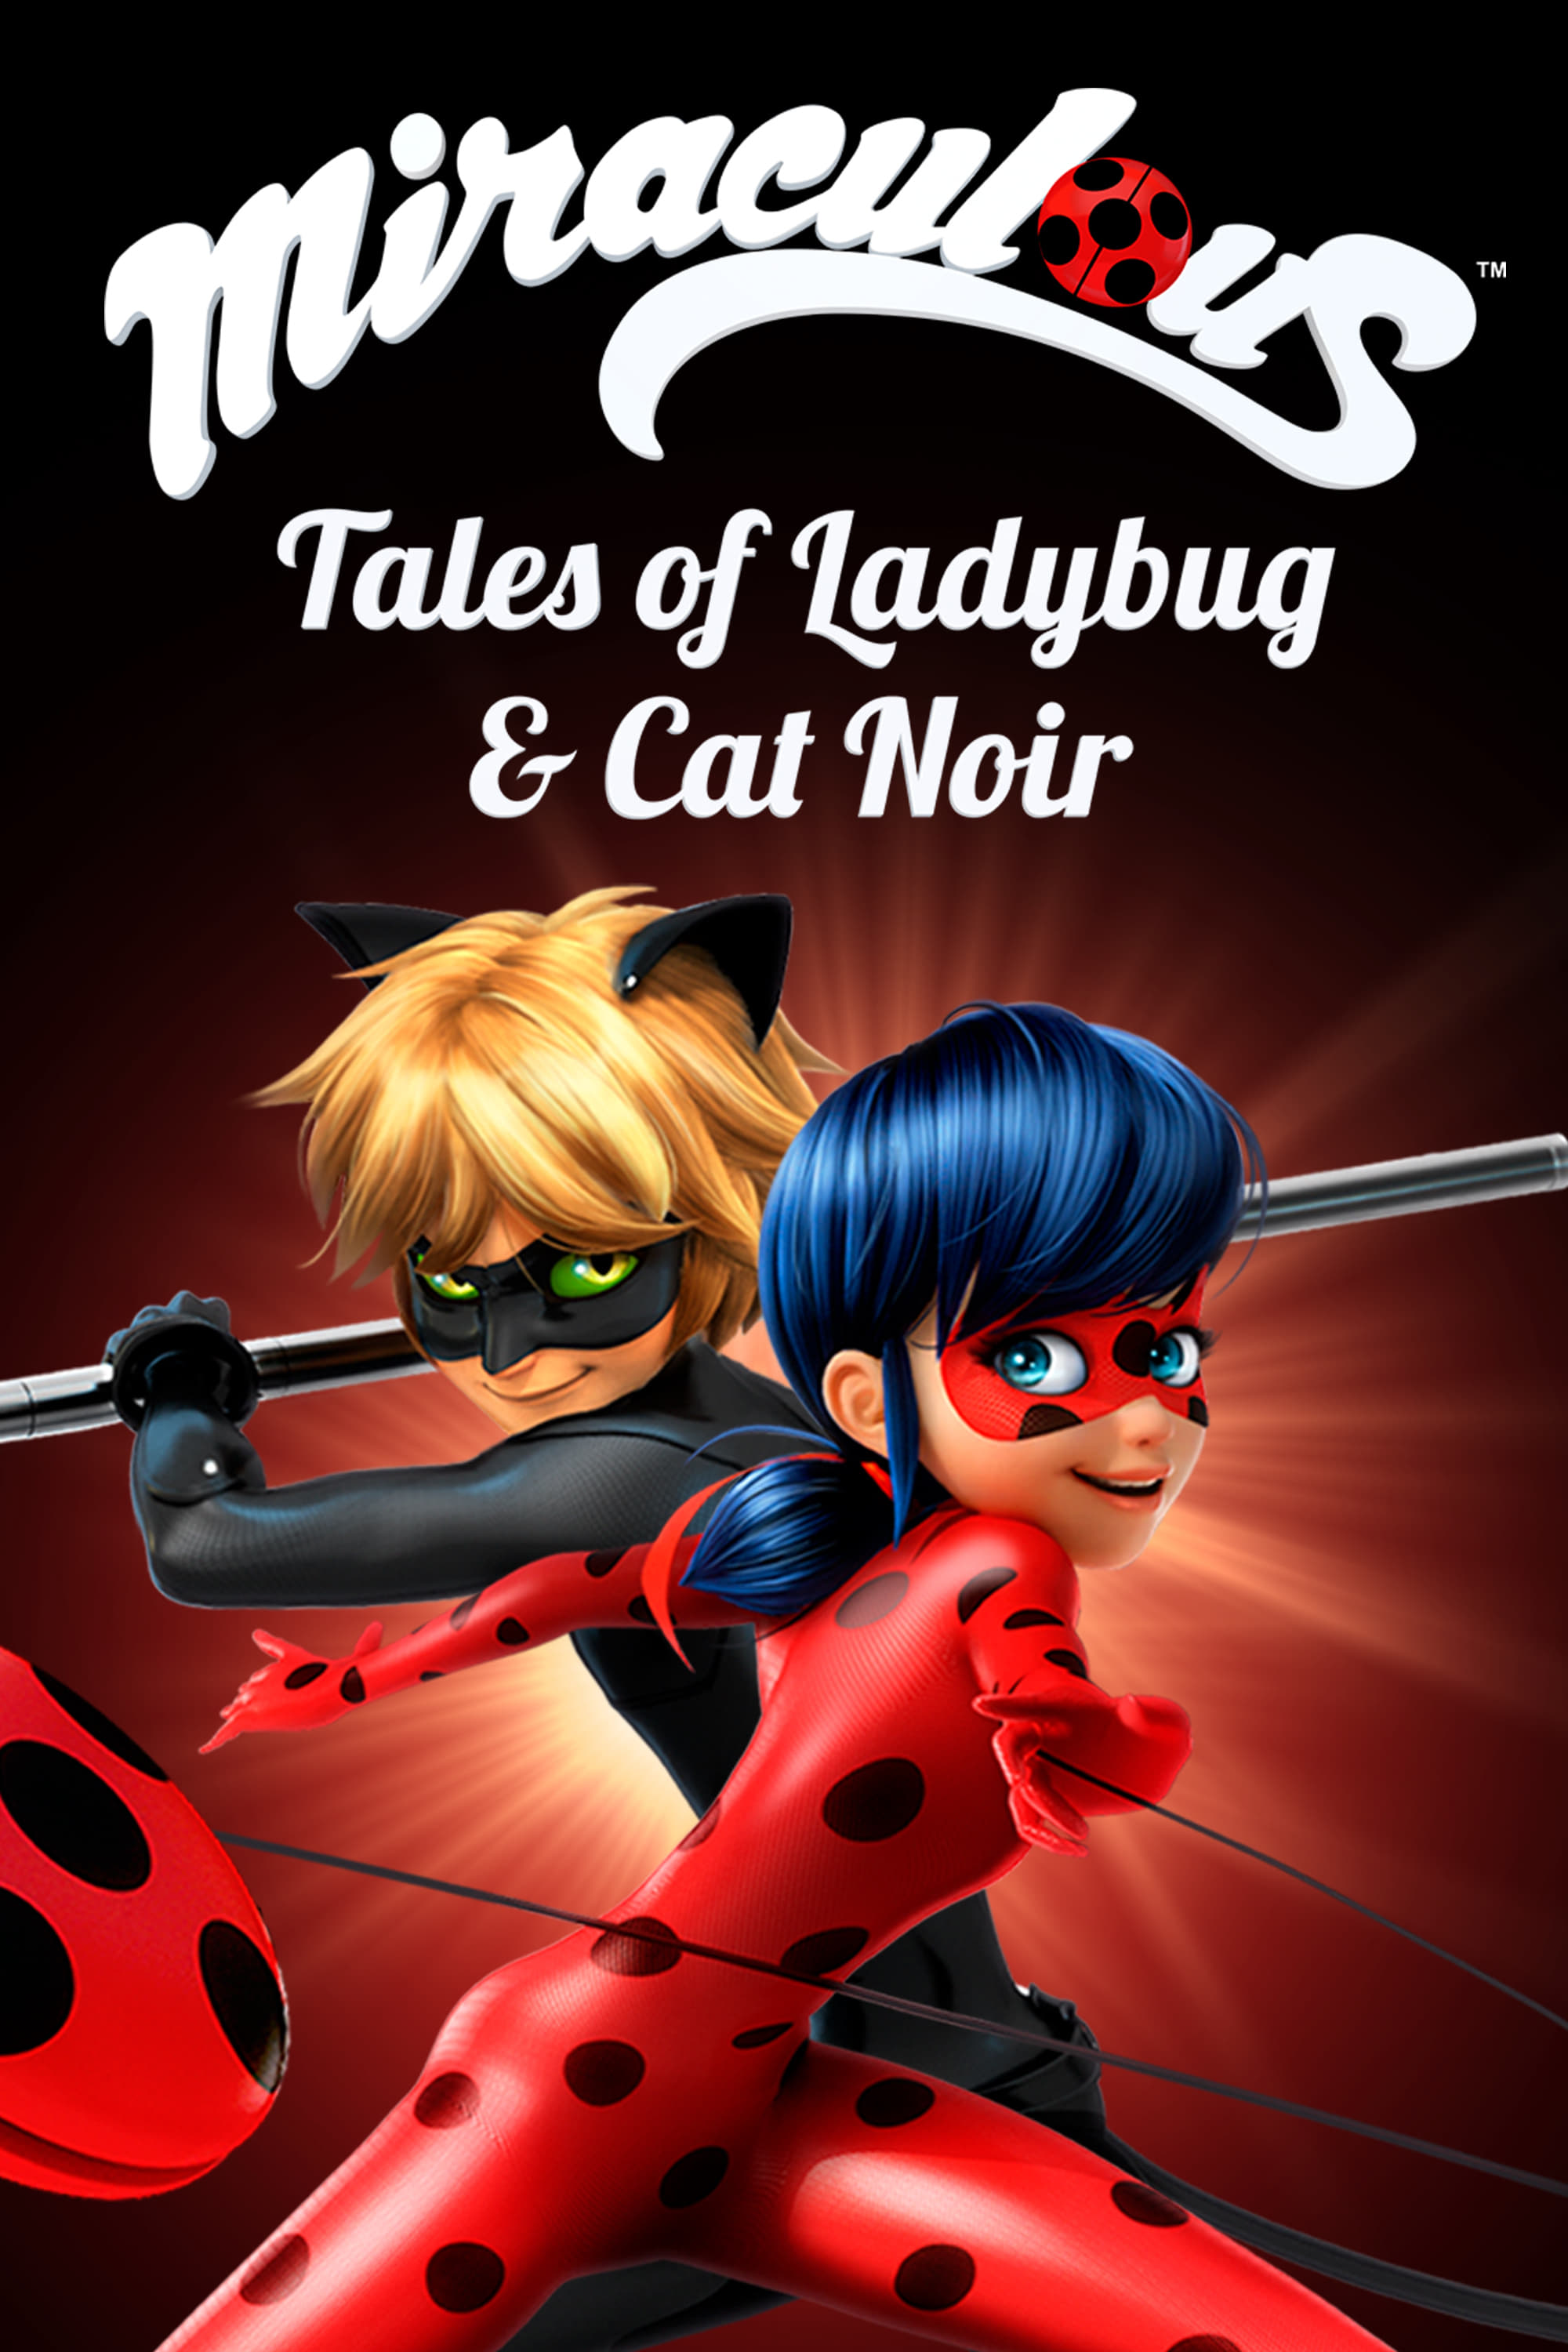 Miraculous: Las aventuras de Ladybug